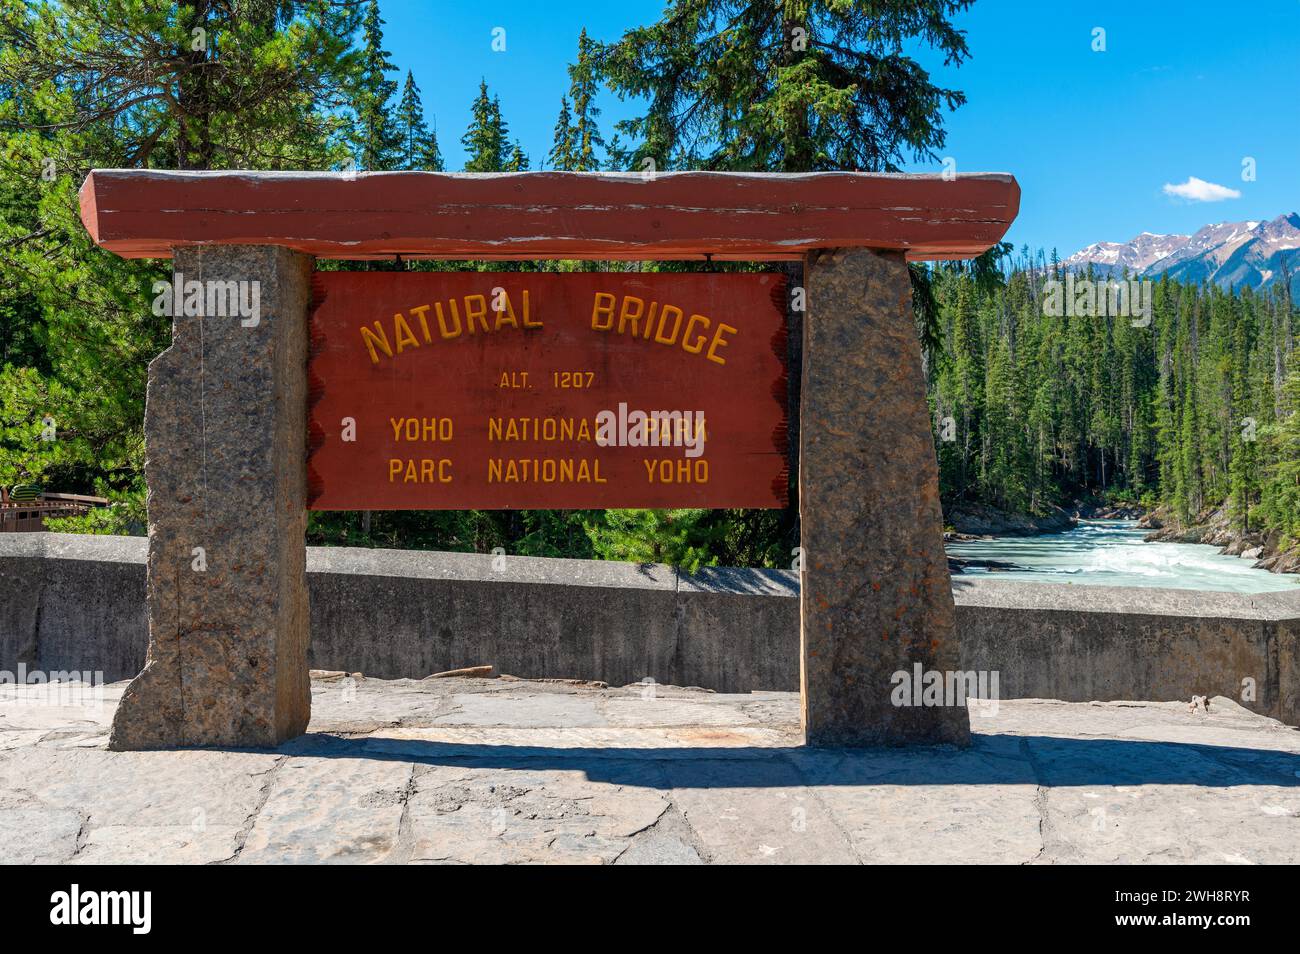 Natural Bridge rock formation sign by the Kicking Horse River, Yoho national park, British Columbia, Canada. Stock Photo